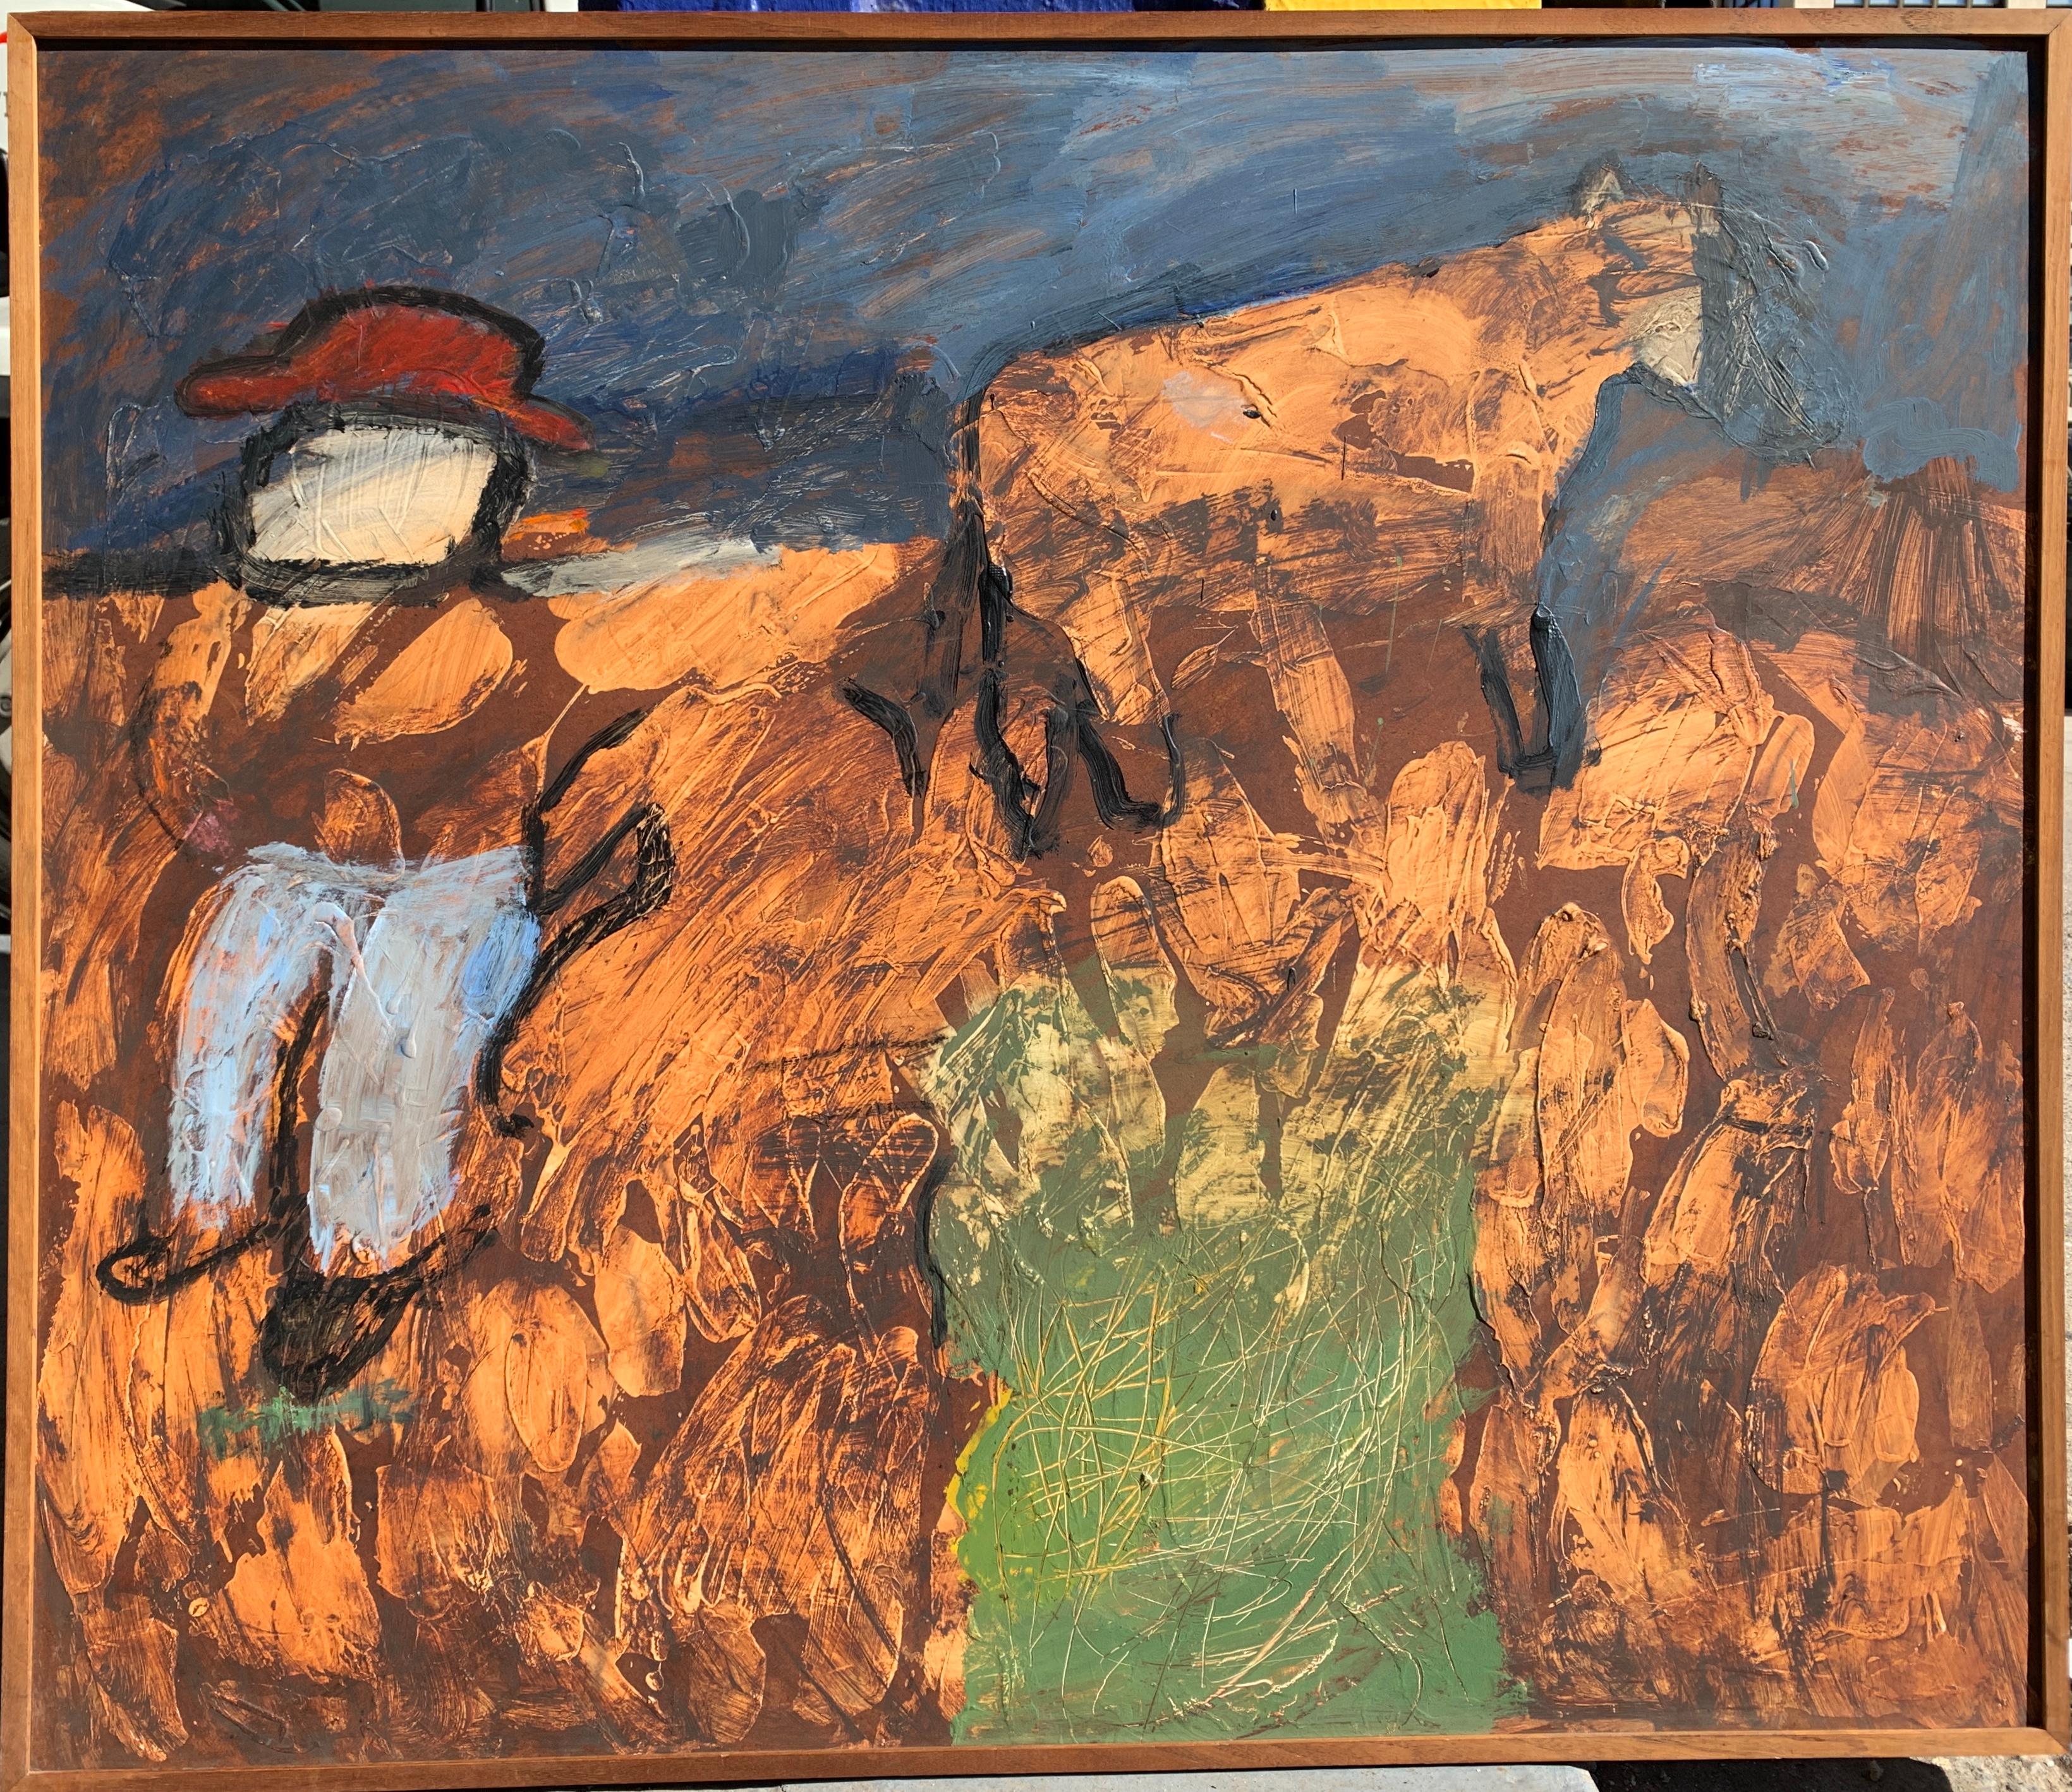 Sylvia Rutkoff Figurative Painting - "The Cowboy" Impasto Painting c. 1960s Brooklyn Museum Art Brut